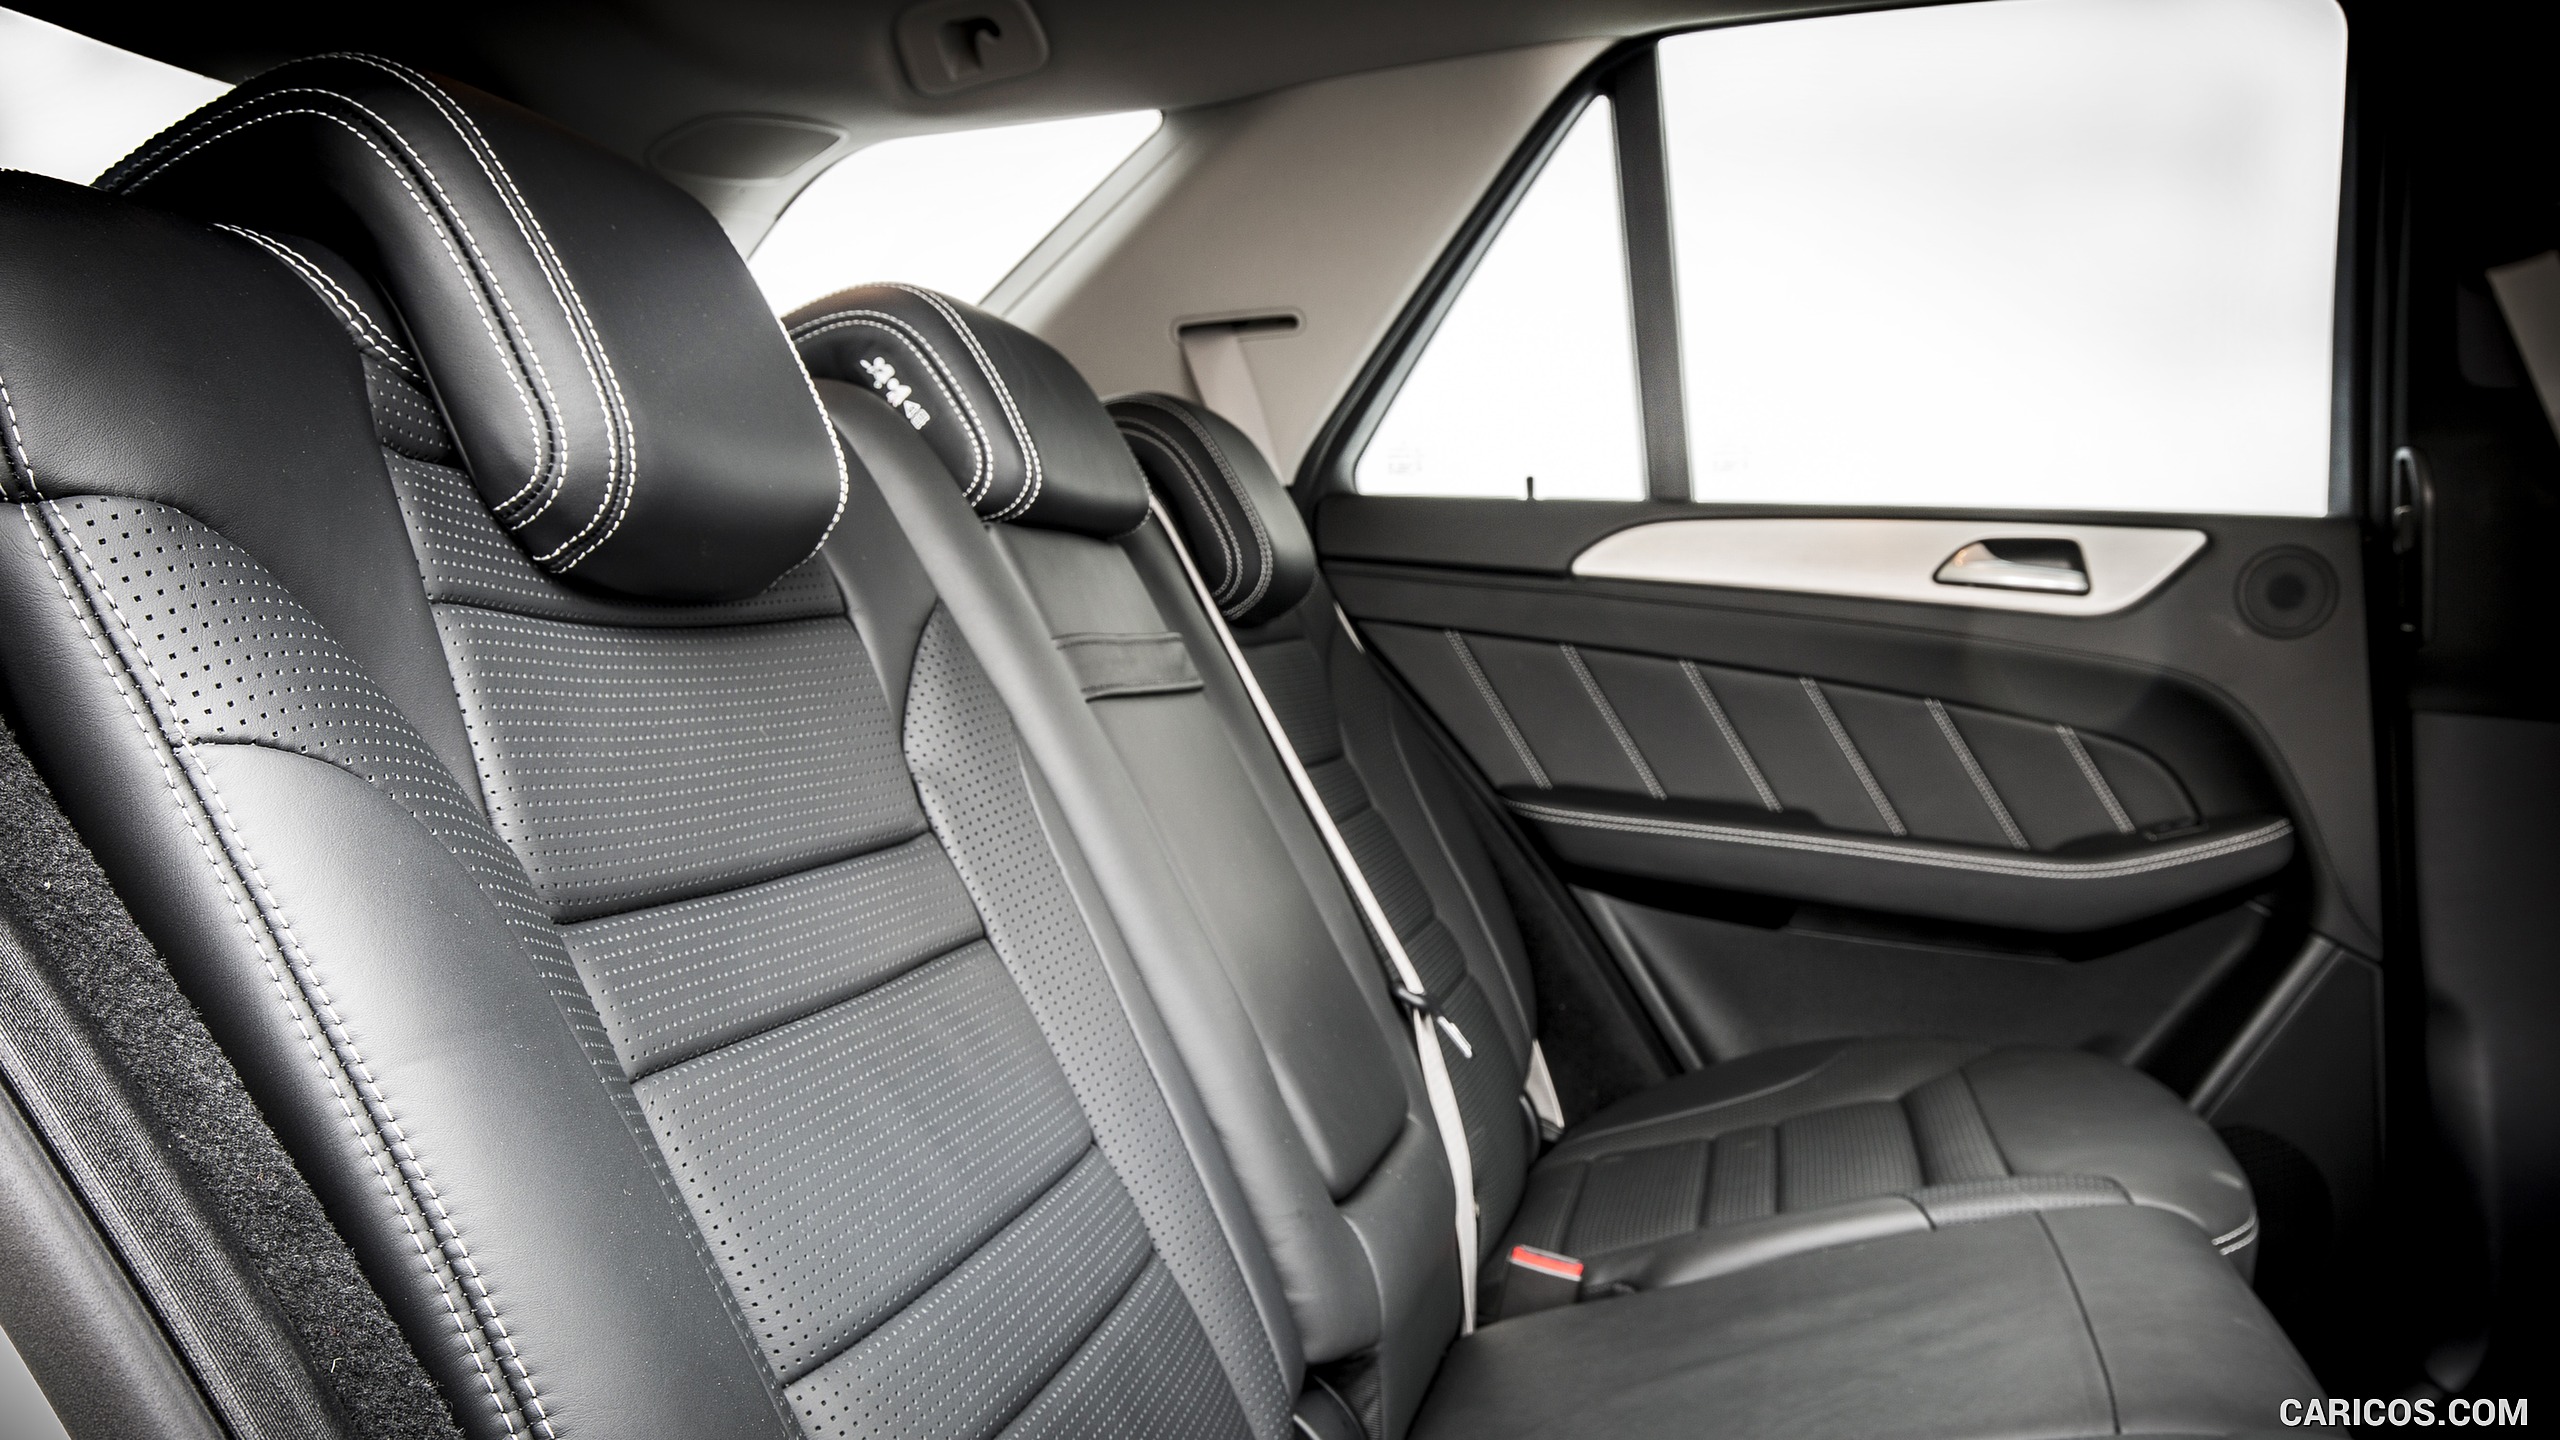 2016 Mercedes-AMG GLE 63 S (UK-Spec) - Interior, Rear Seats, #68 of 68